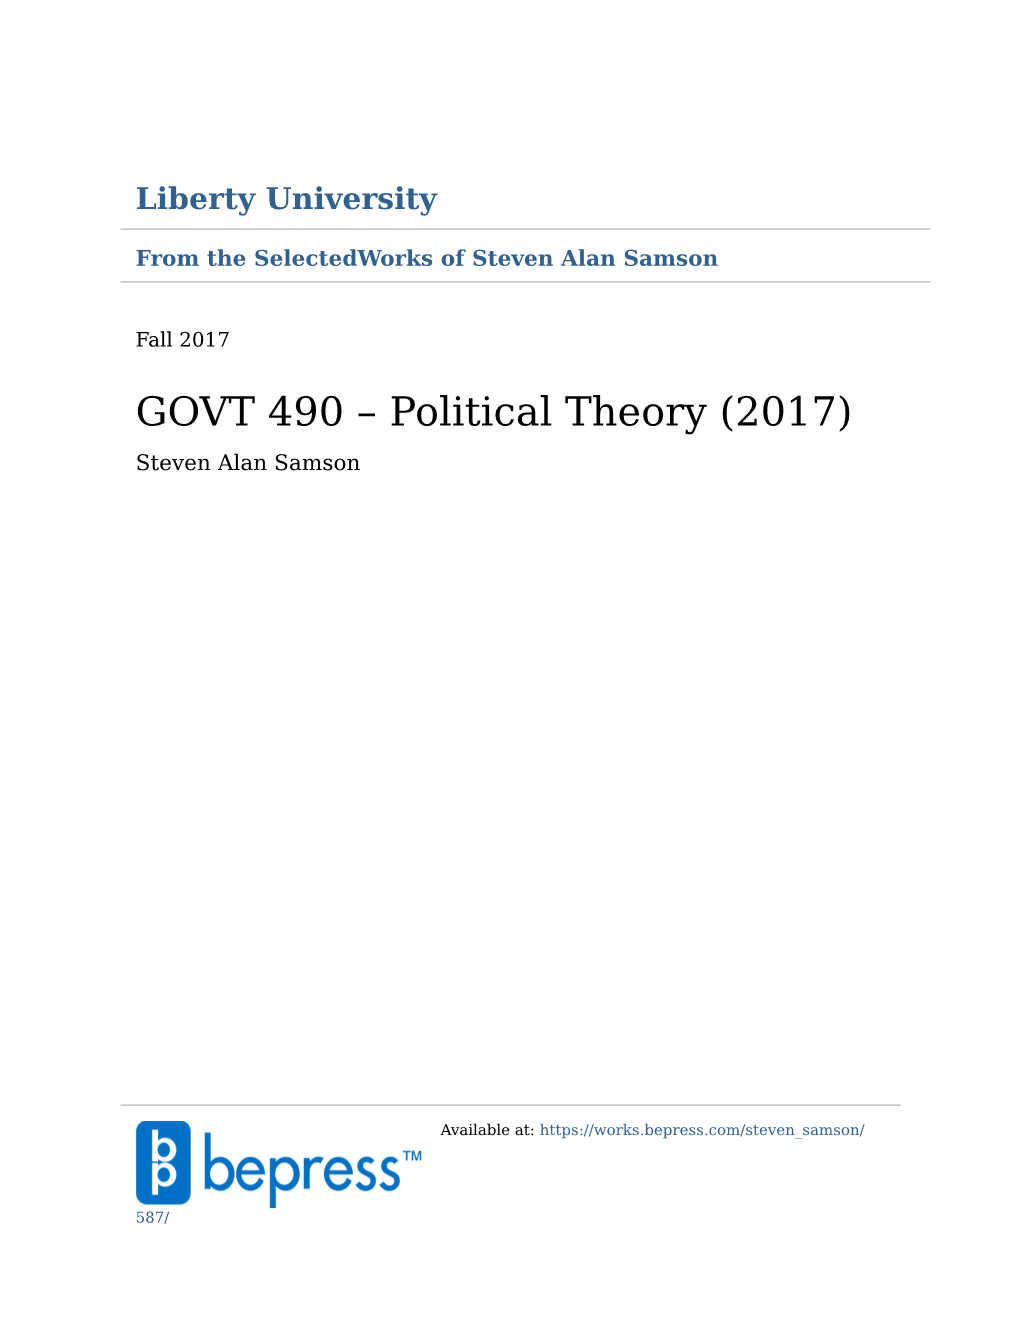 GOVT 490 – Political Theory (2017) Steven Alan Samson